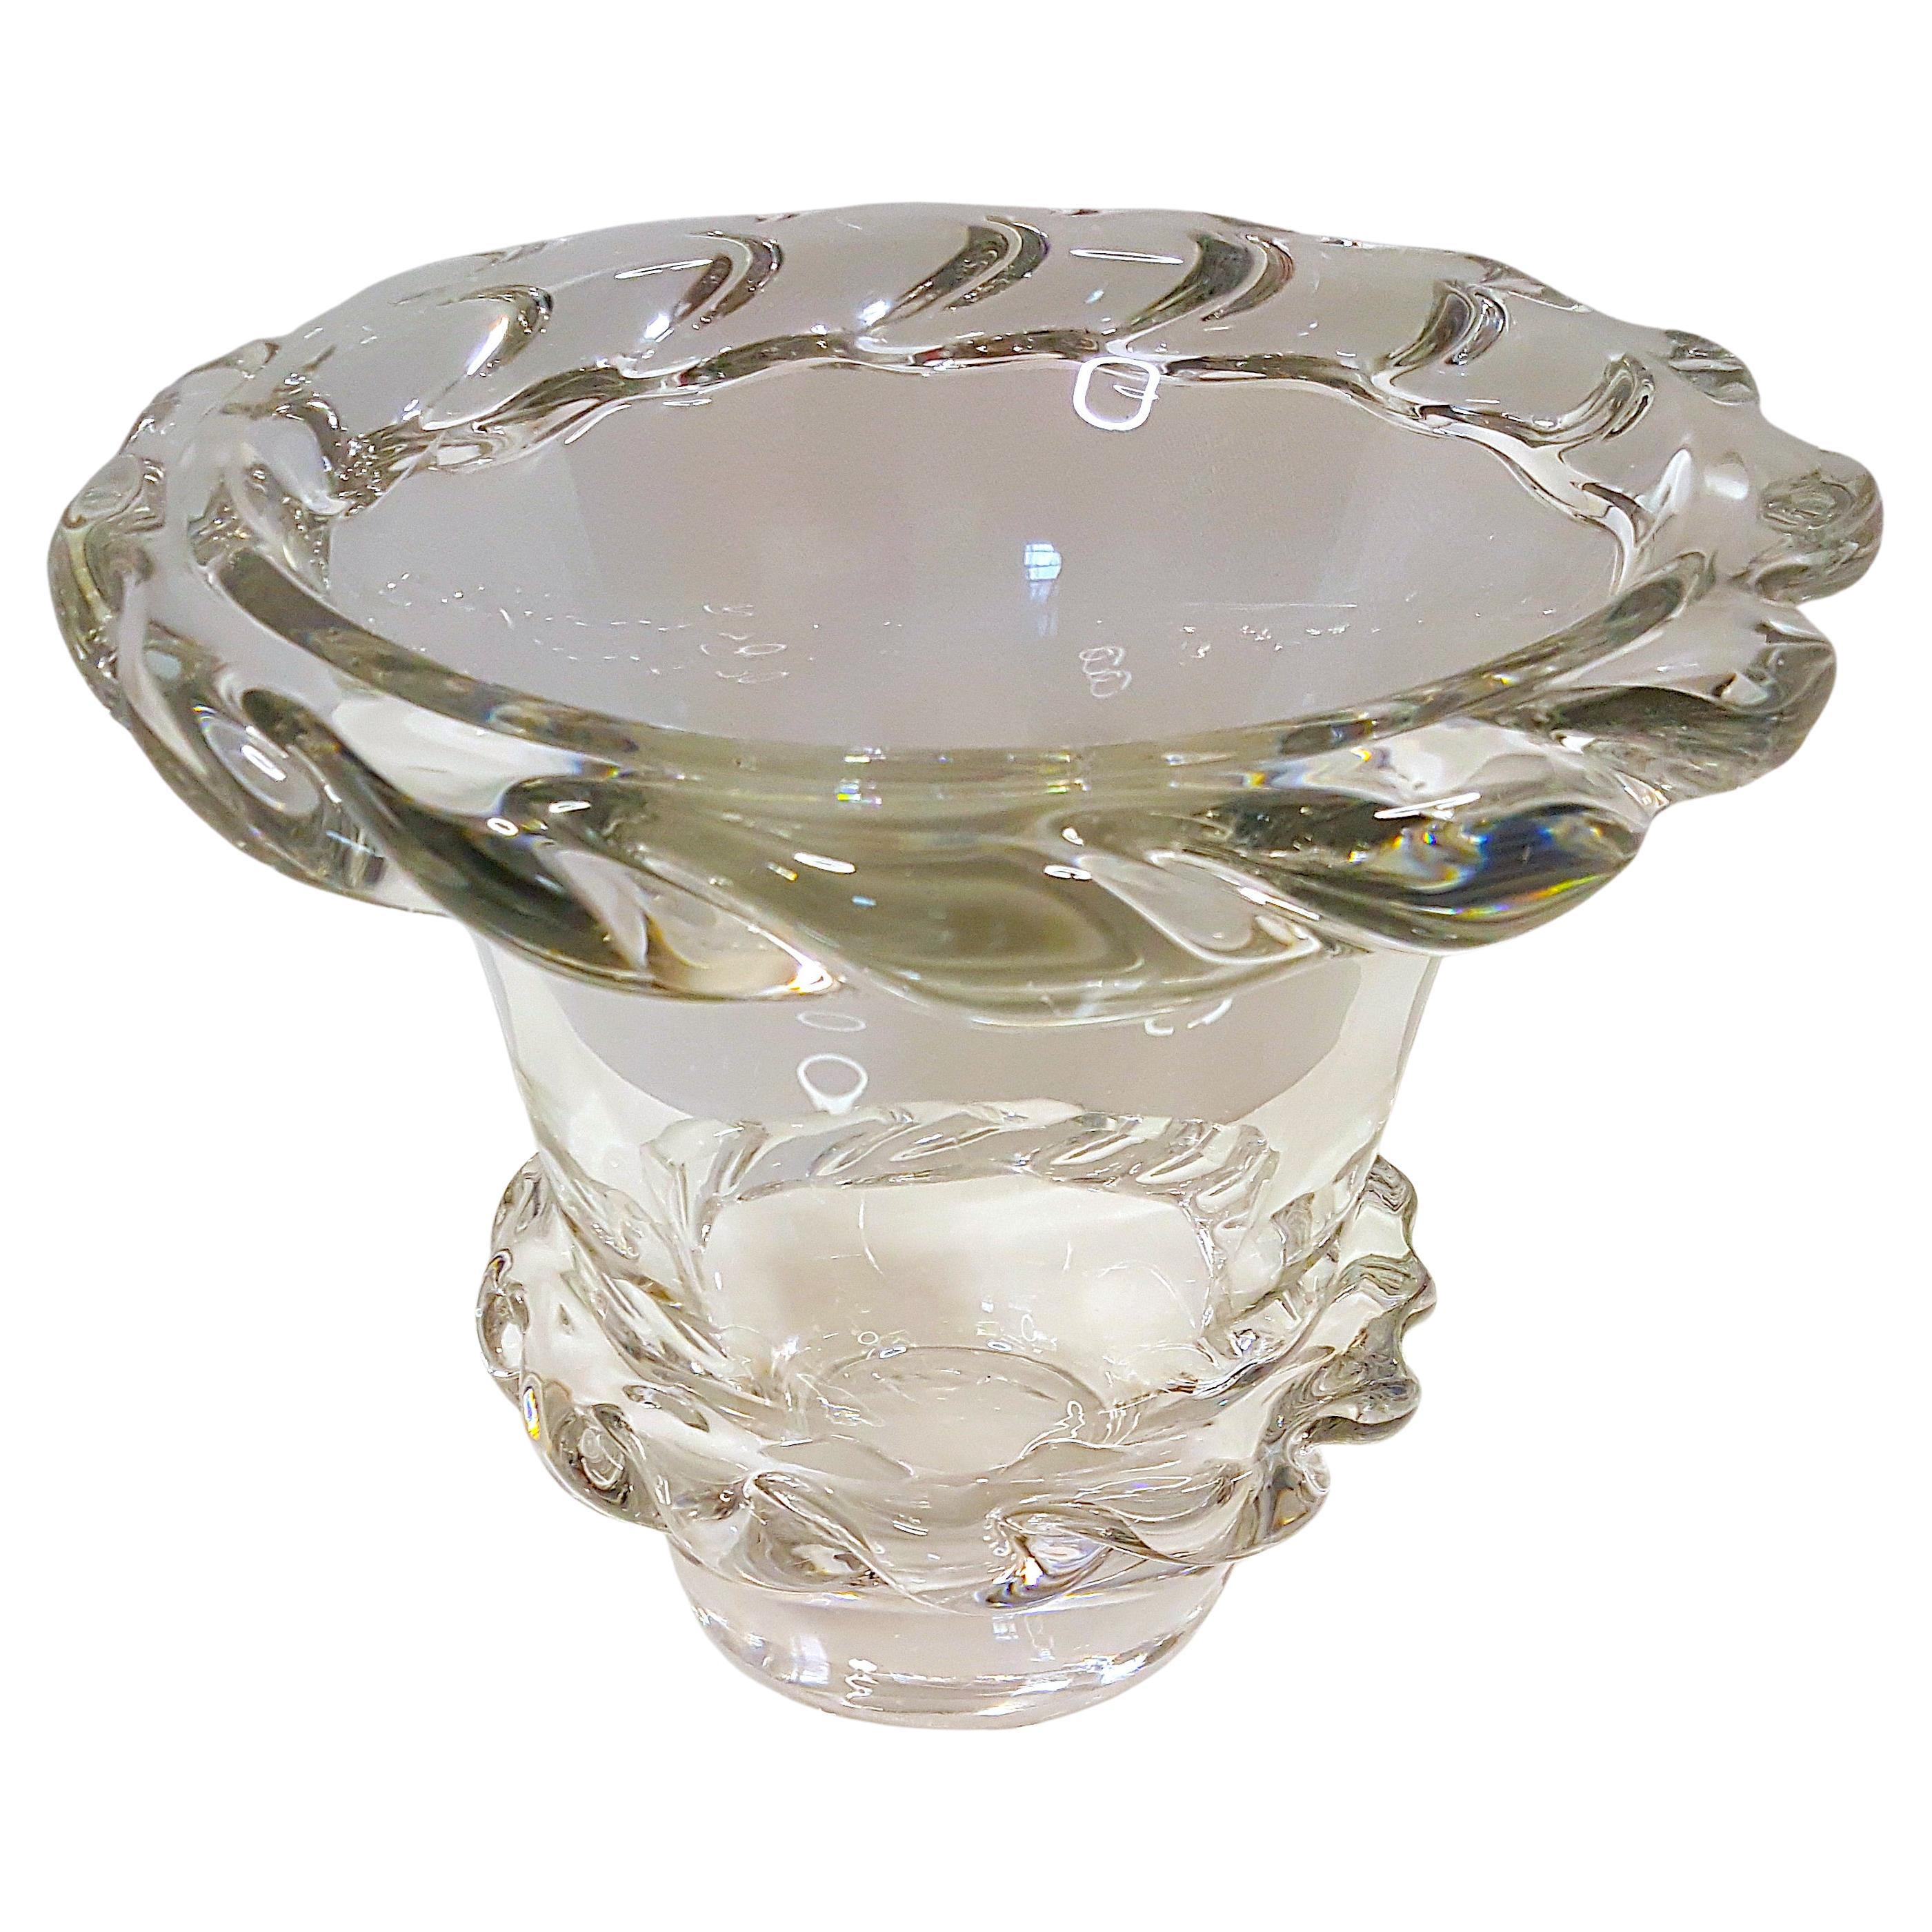 DaumNancyFrance Sign 1925 GlassApplications LeadCrystal ArtDeco Sculptural Vase